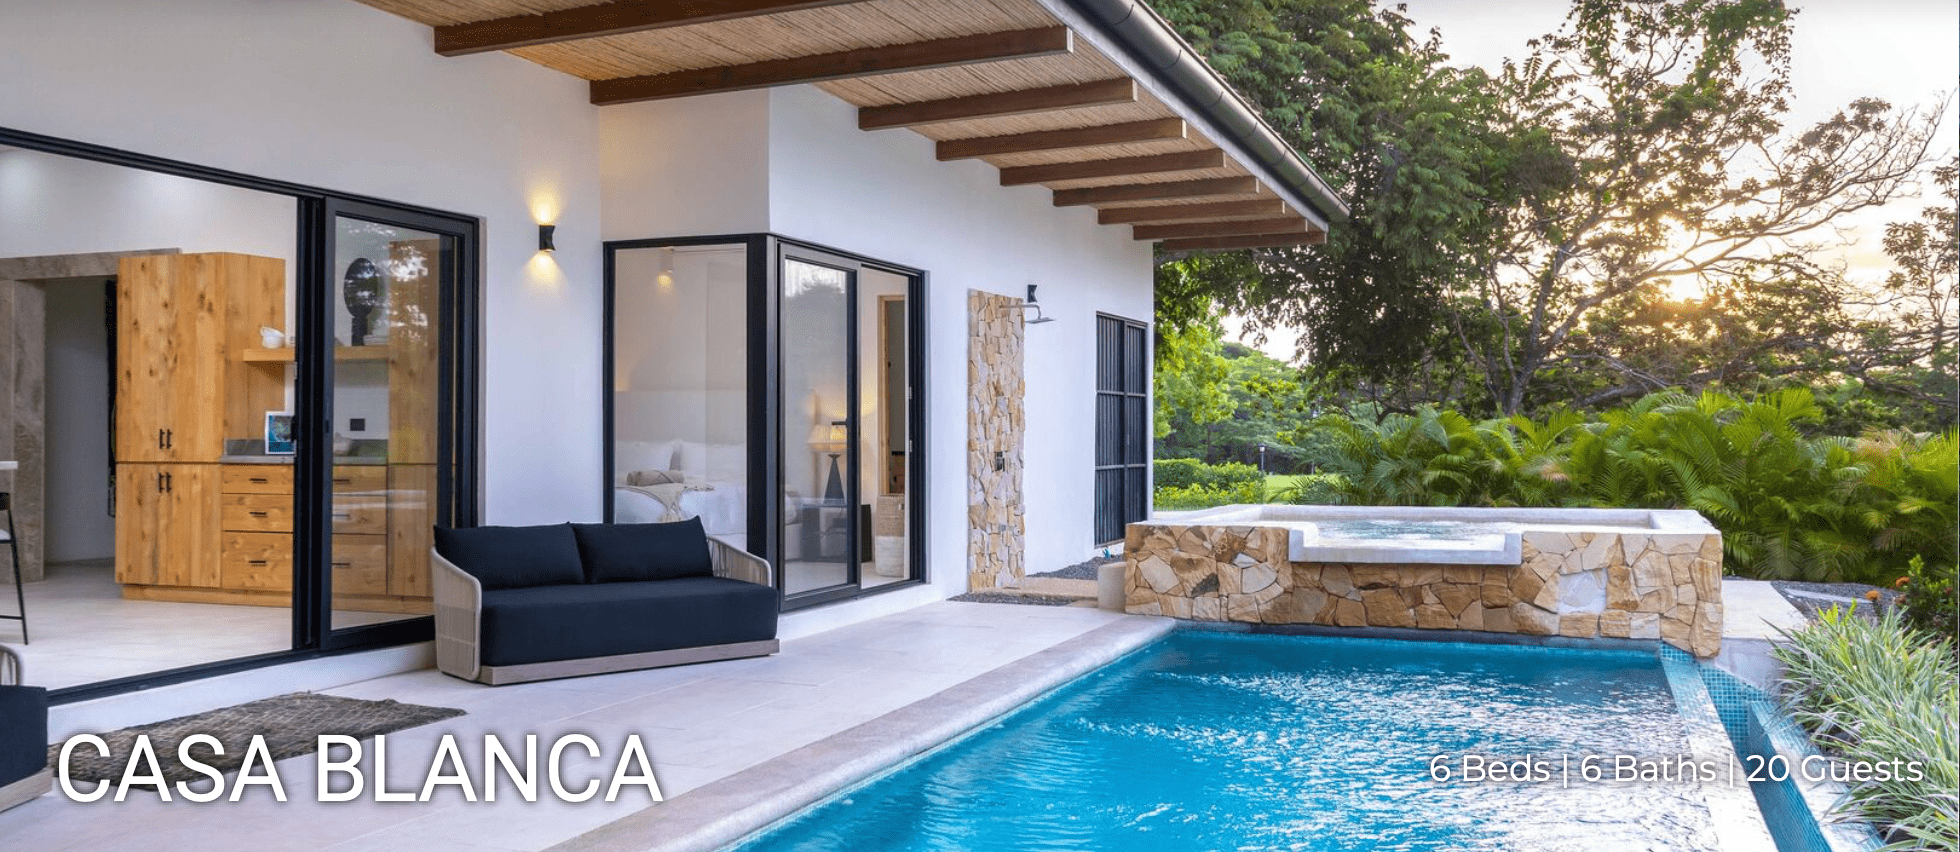 Casa Blanca heated jacuzzi vacation rental Hacienda Pinilla